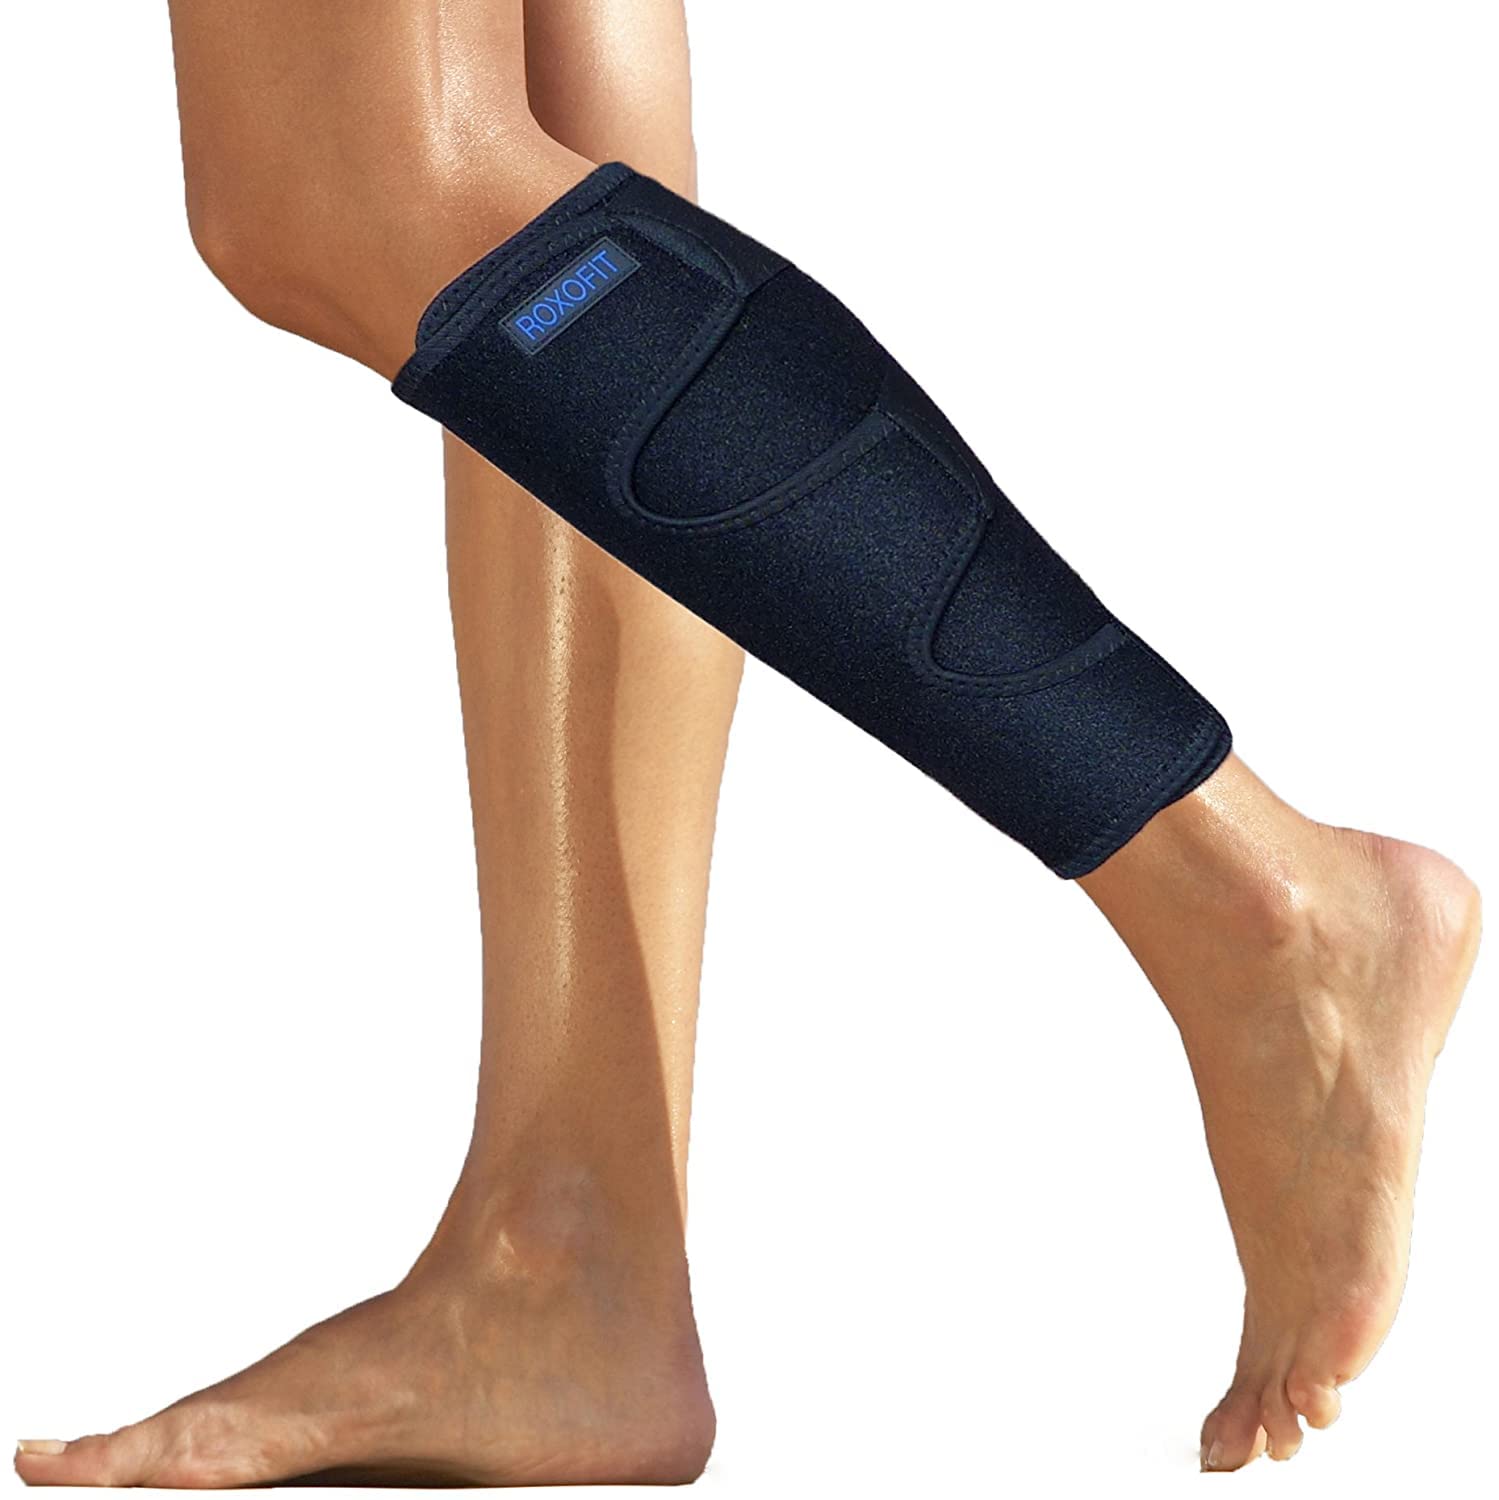 Calf Muscle Pump  Steinmann Prosthetics & Orthotics